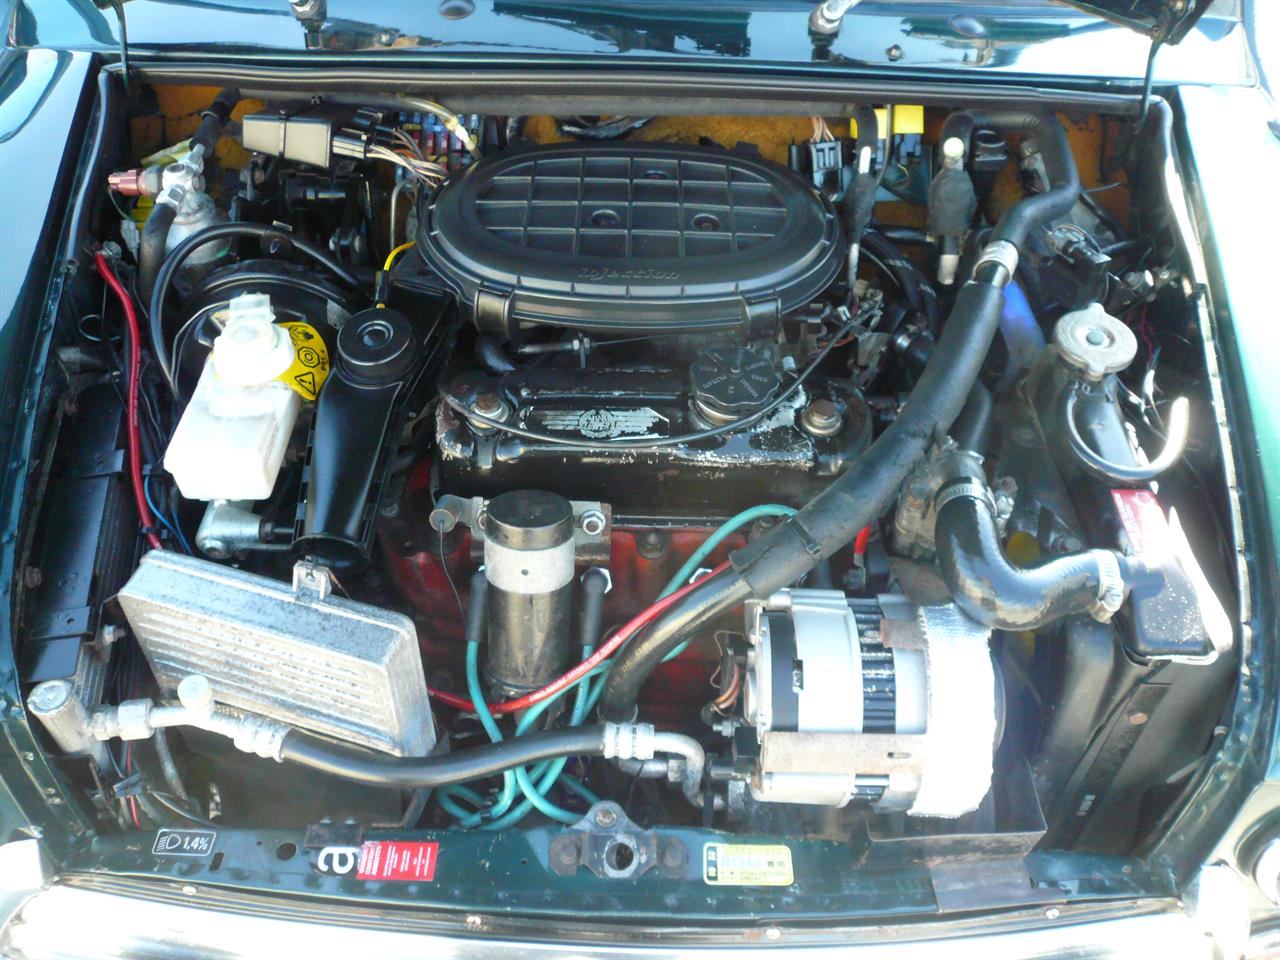 1995 Mini 1300cc fuel injected Rover